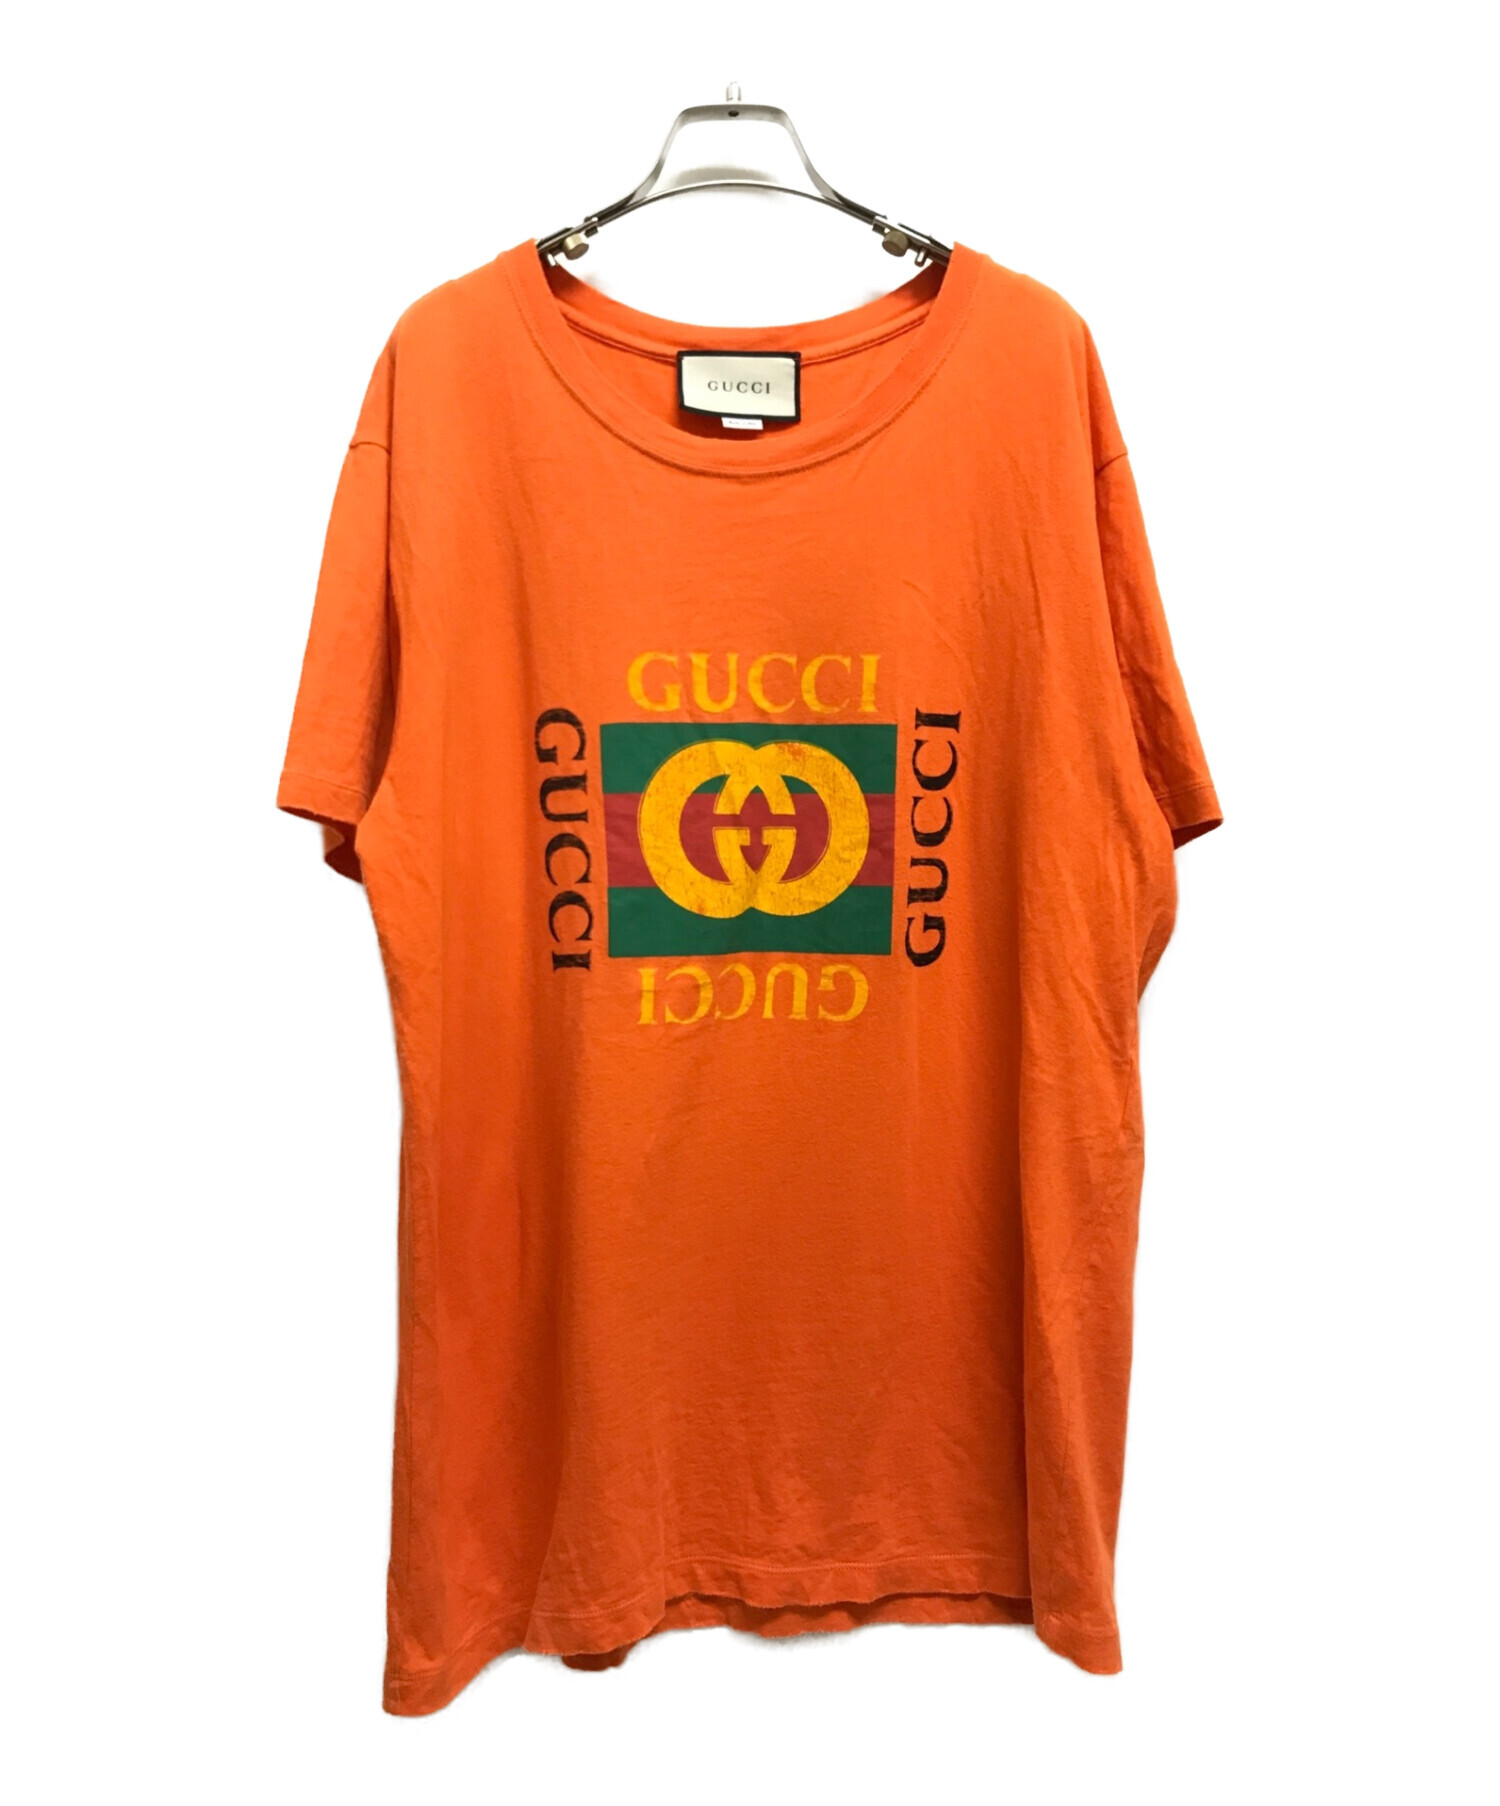 GUCCI (グッチ) ヴィンテージグリッターロゴプリントダメージTシャツ オレンジ サイズ:下記参照